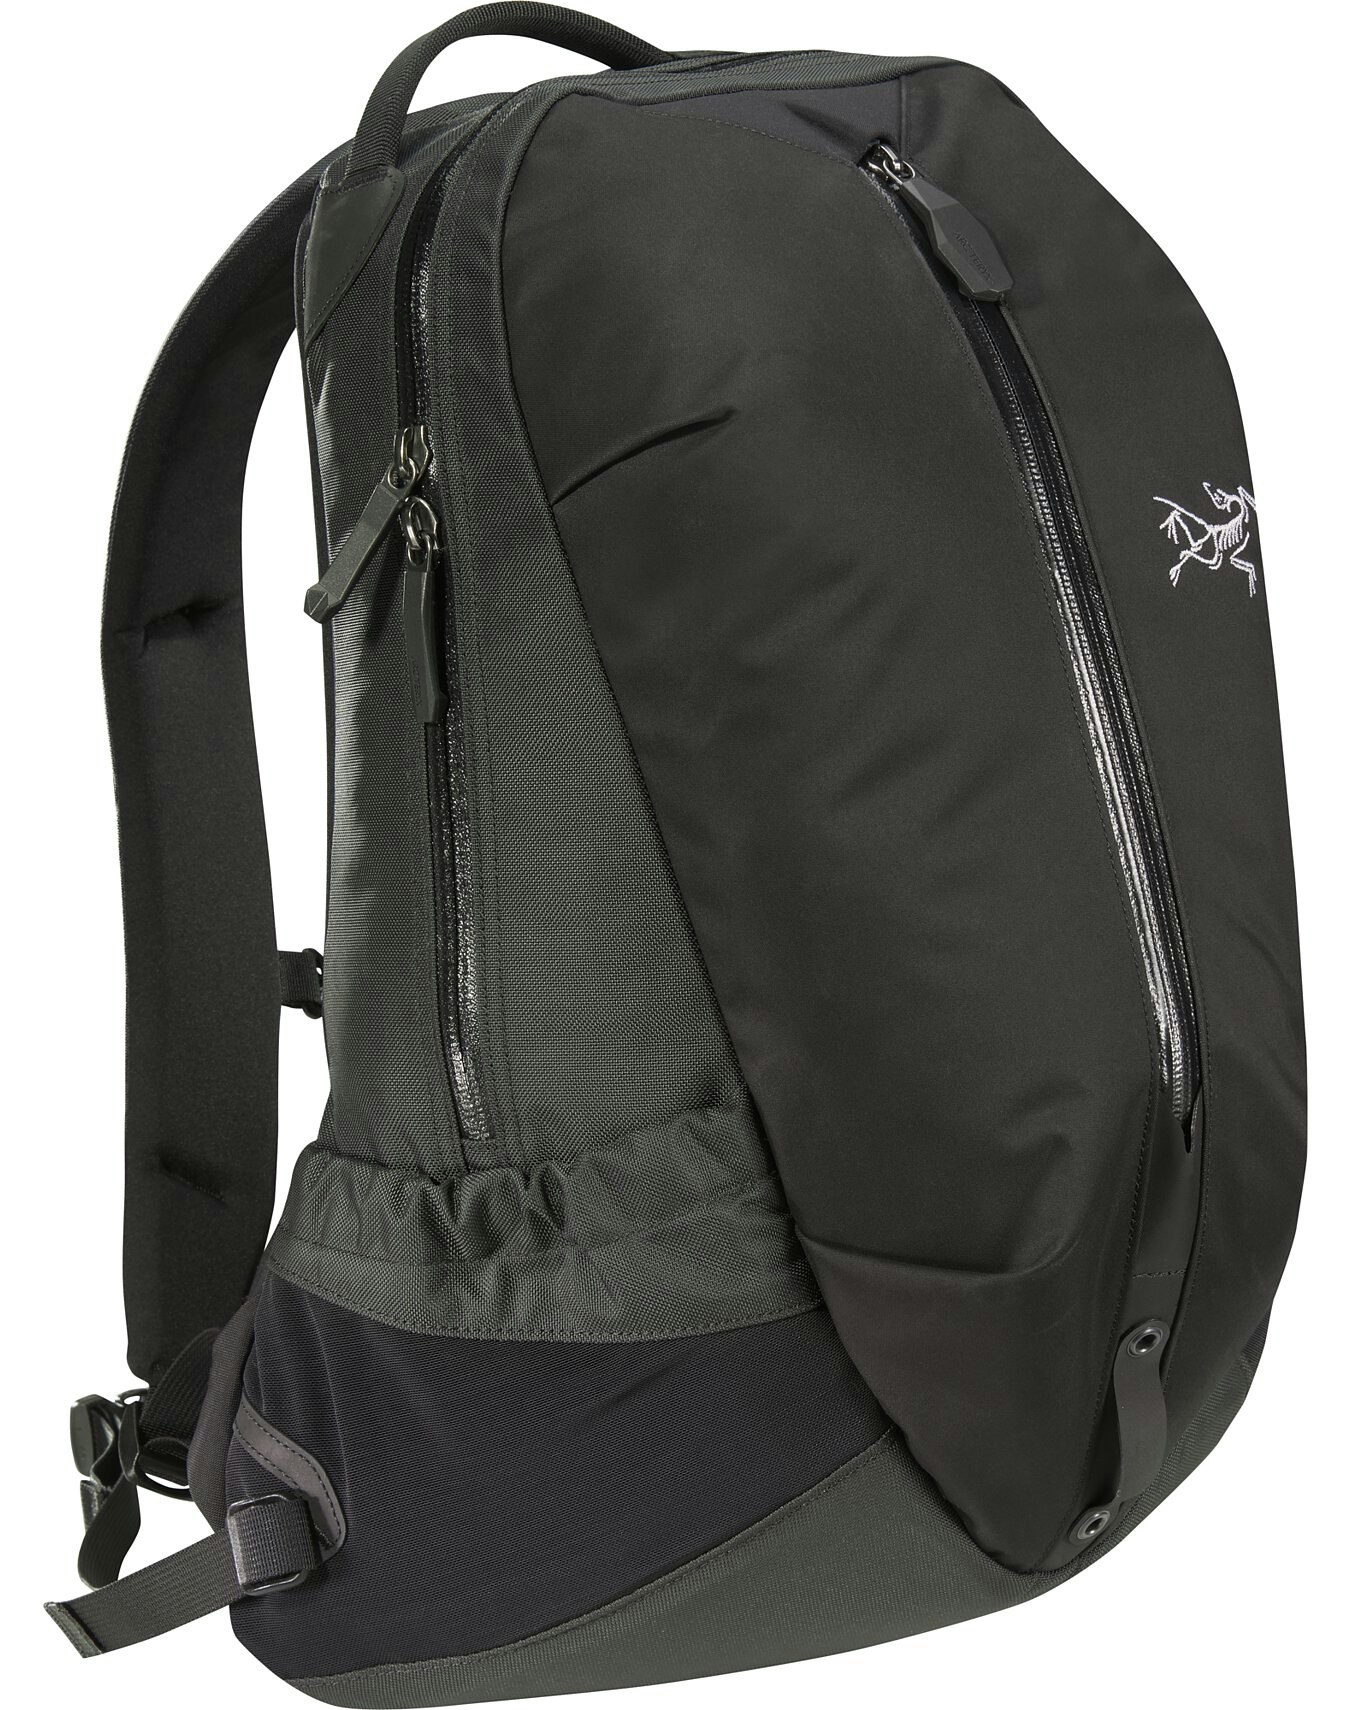 Arro 16 Backpack Carbon Copy